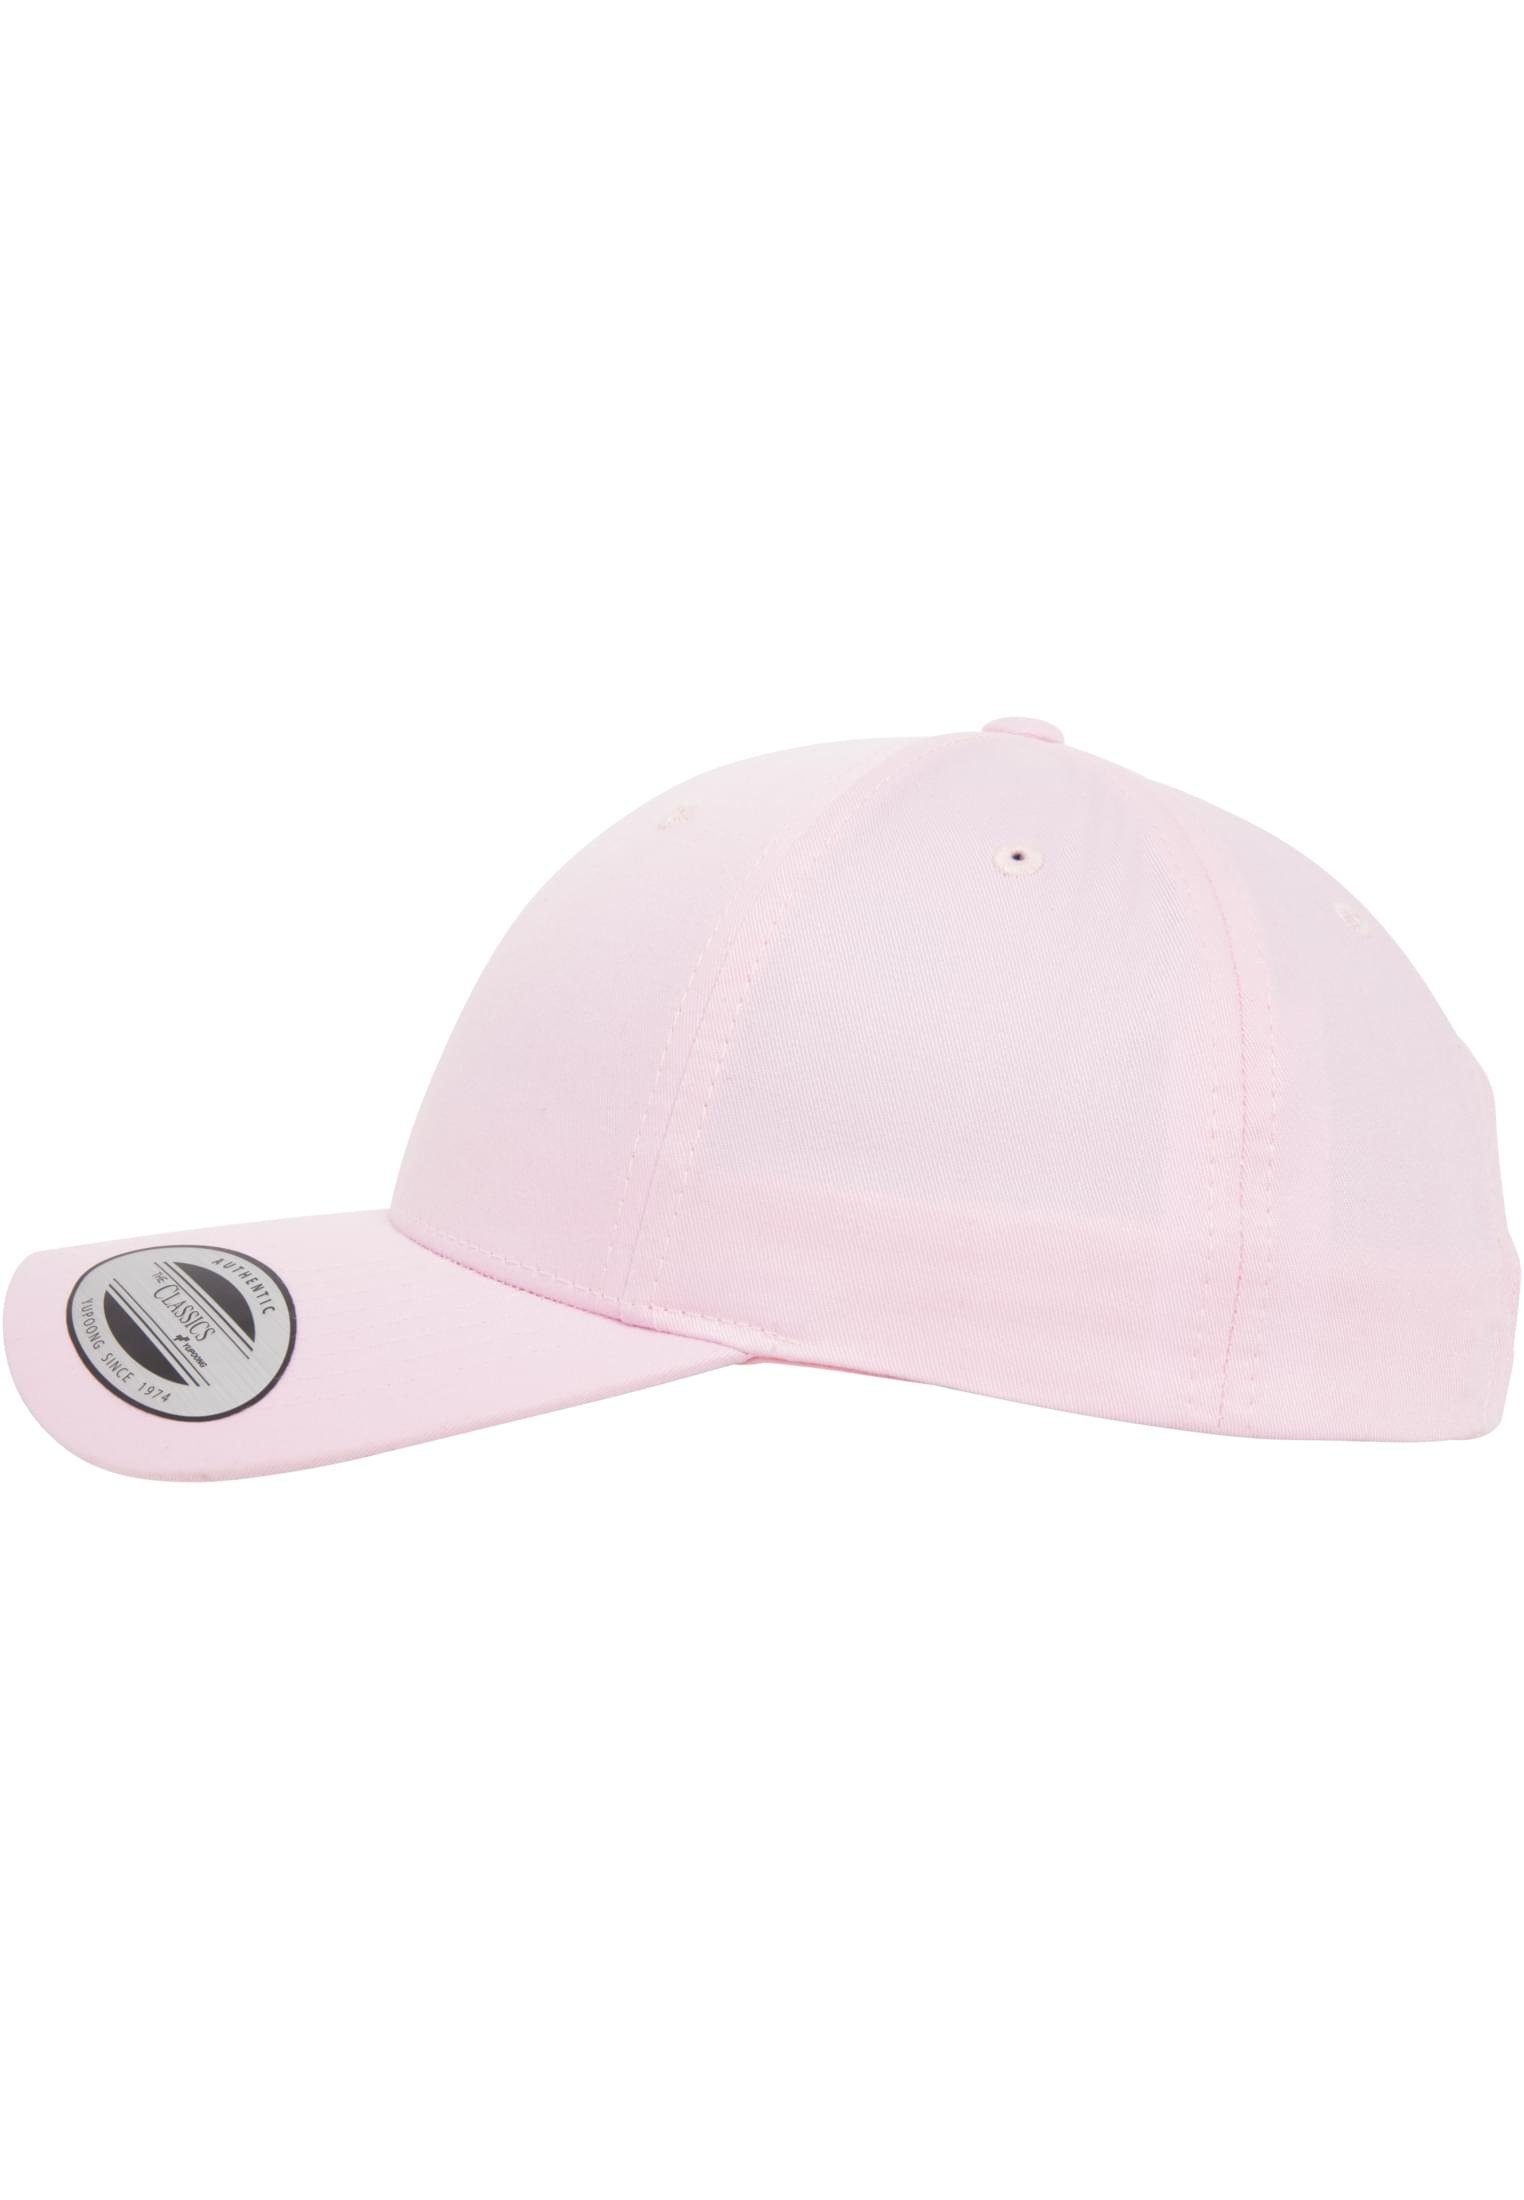 Curved pink Accessoires Classic Flex Cap Flexfit Snapback